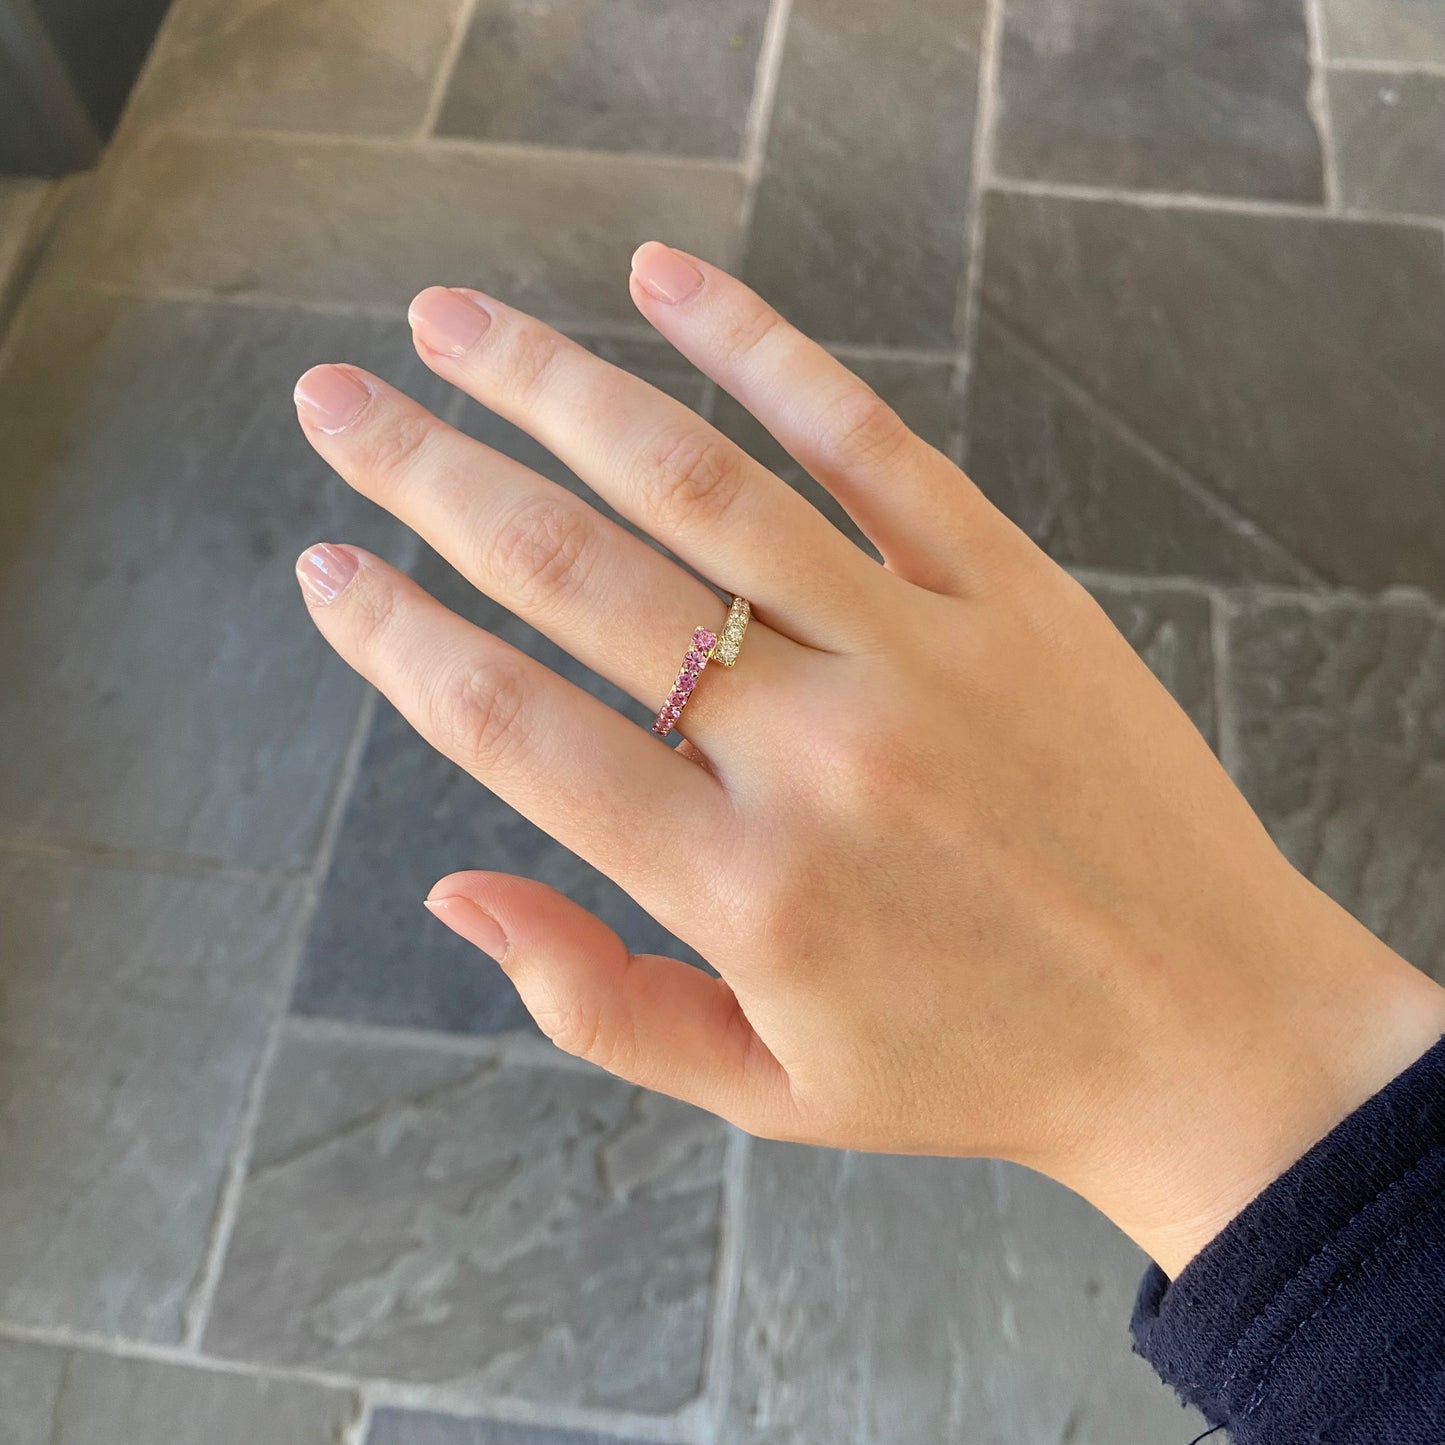 Pink Sapphire & Diamond Bypass Ring